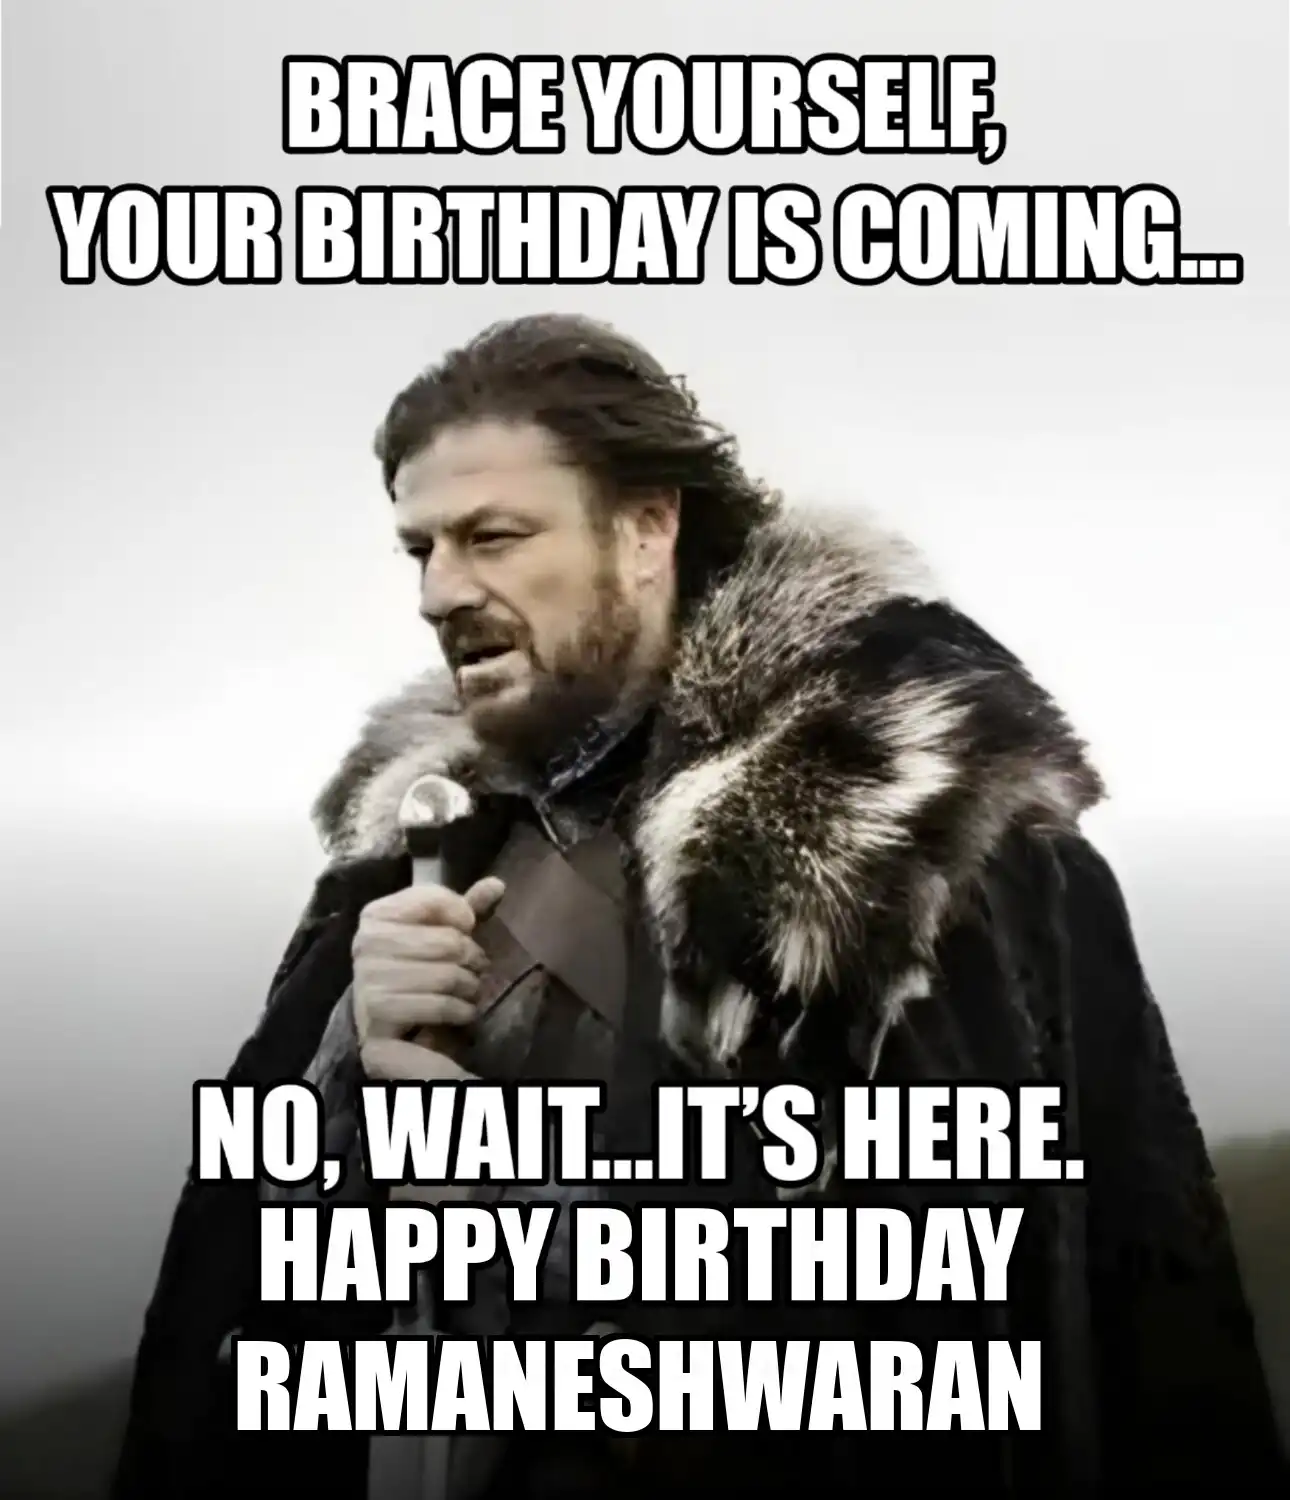 Happy Birthday Ramaneshwaran Brace Yourself Your Birthday Is Coming Meme